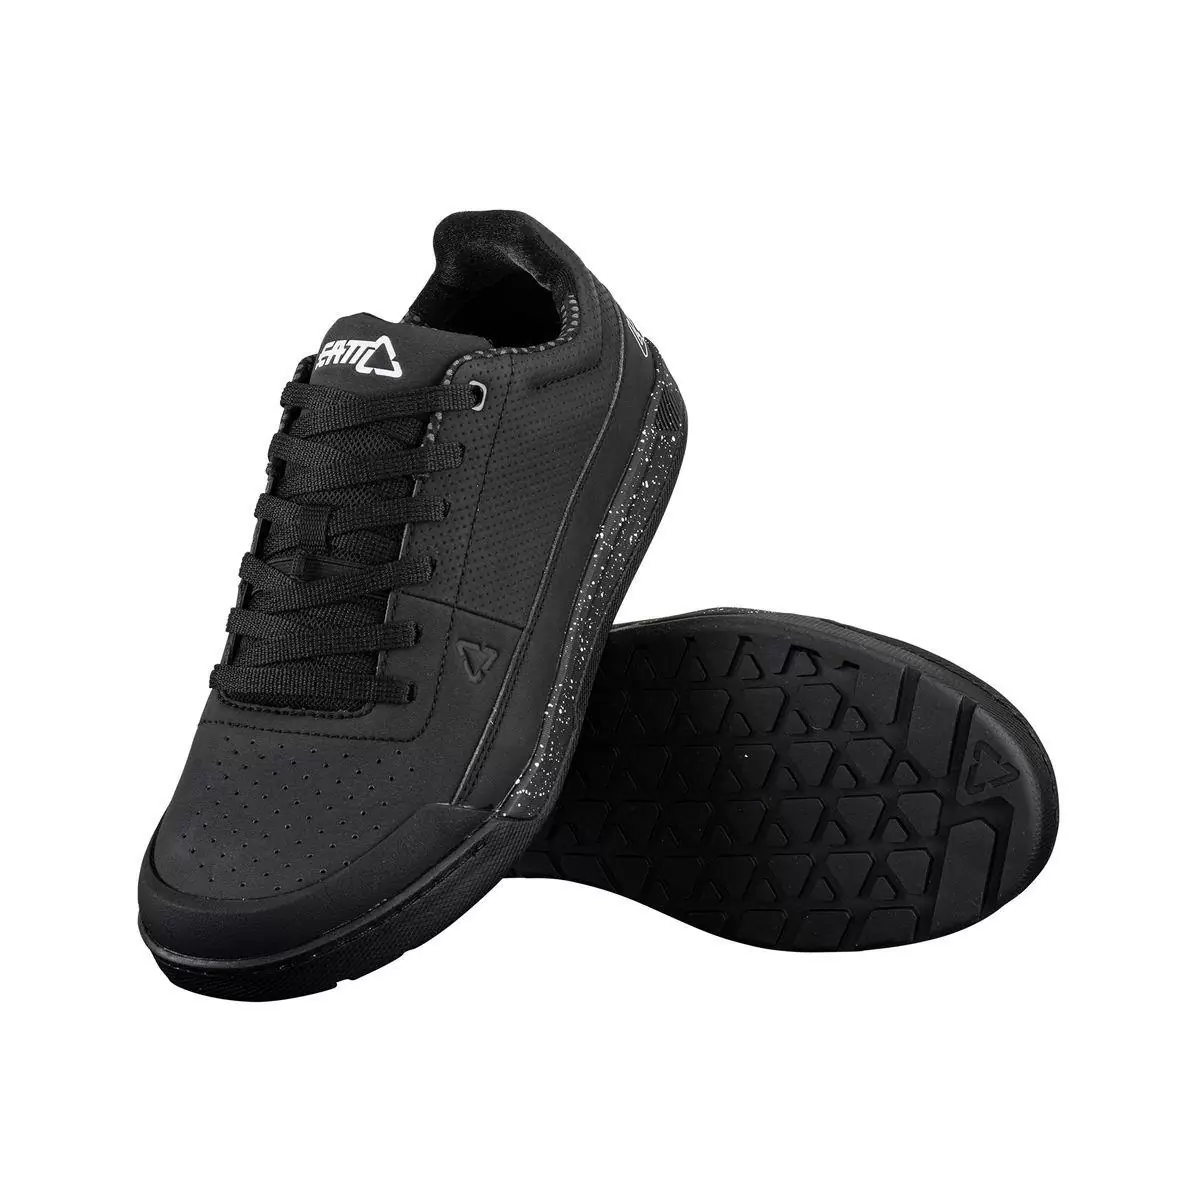 Mtb Shoes 2.0 Flat Black Size 43.5 #5